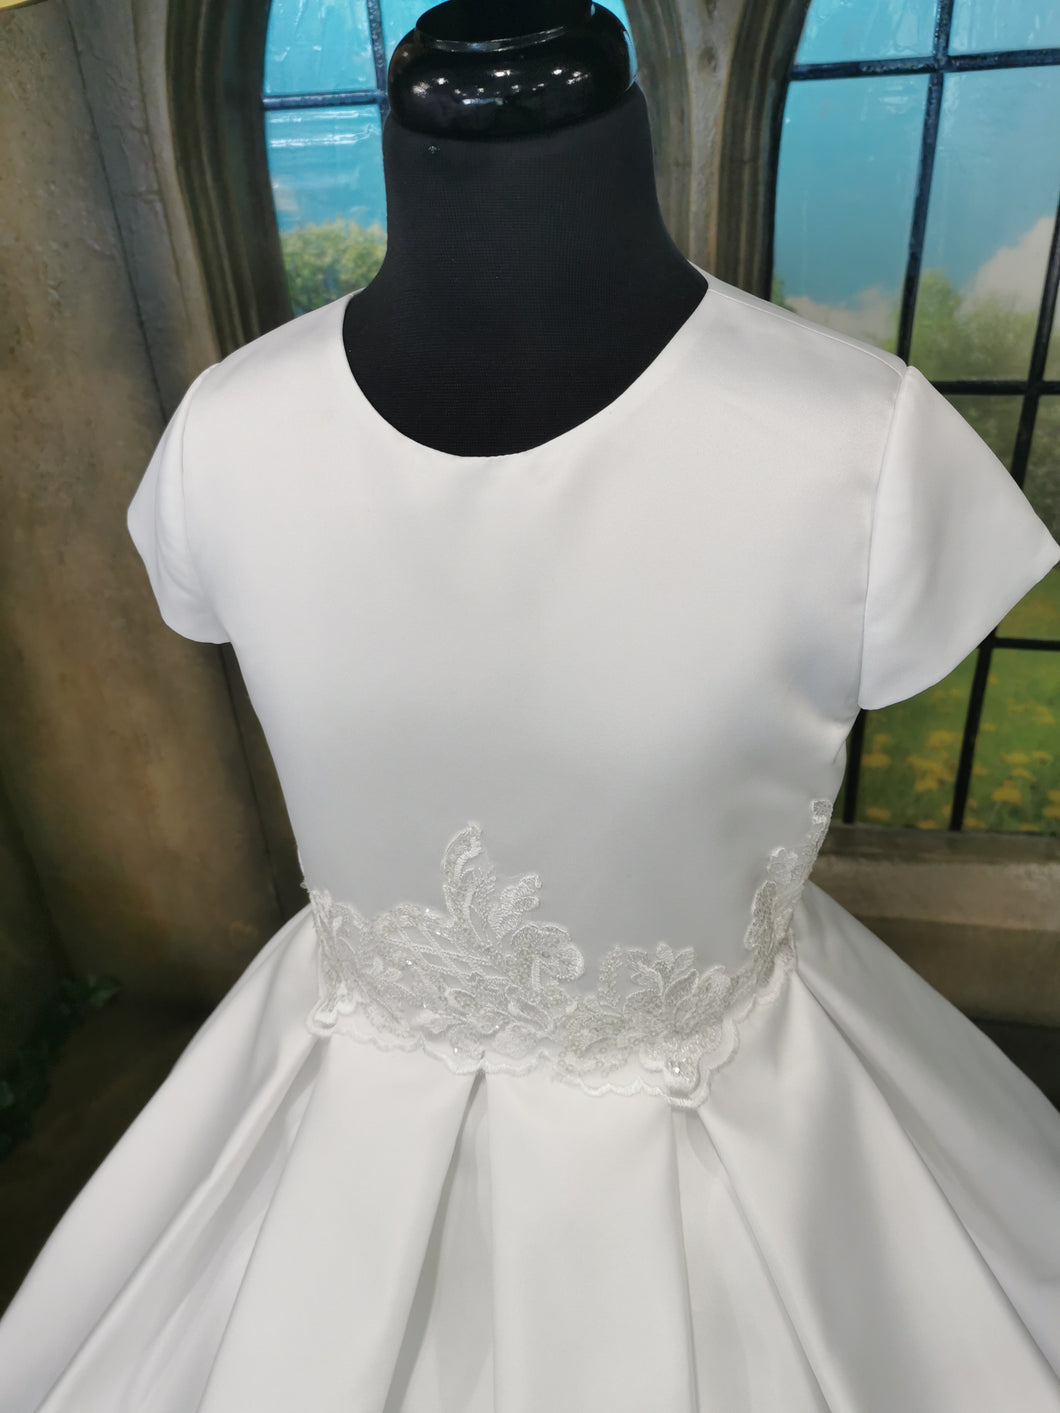 SALE KINDLE EXCLUSIVE Girls White Communion Dress:- PJ58